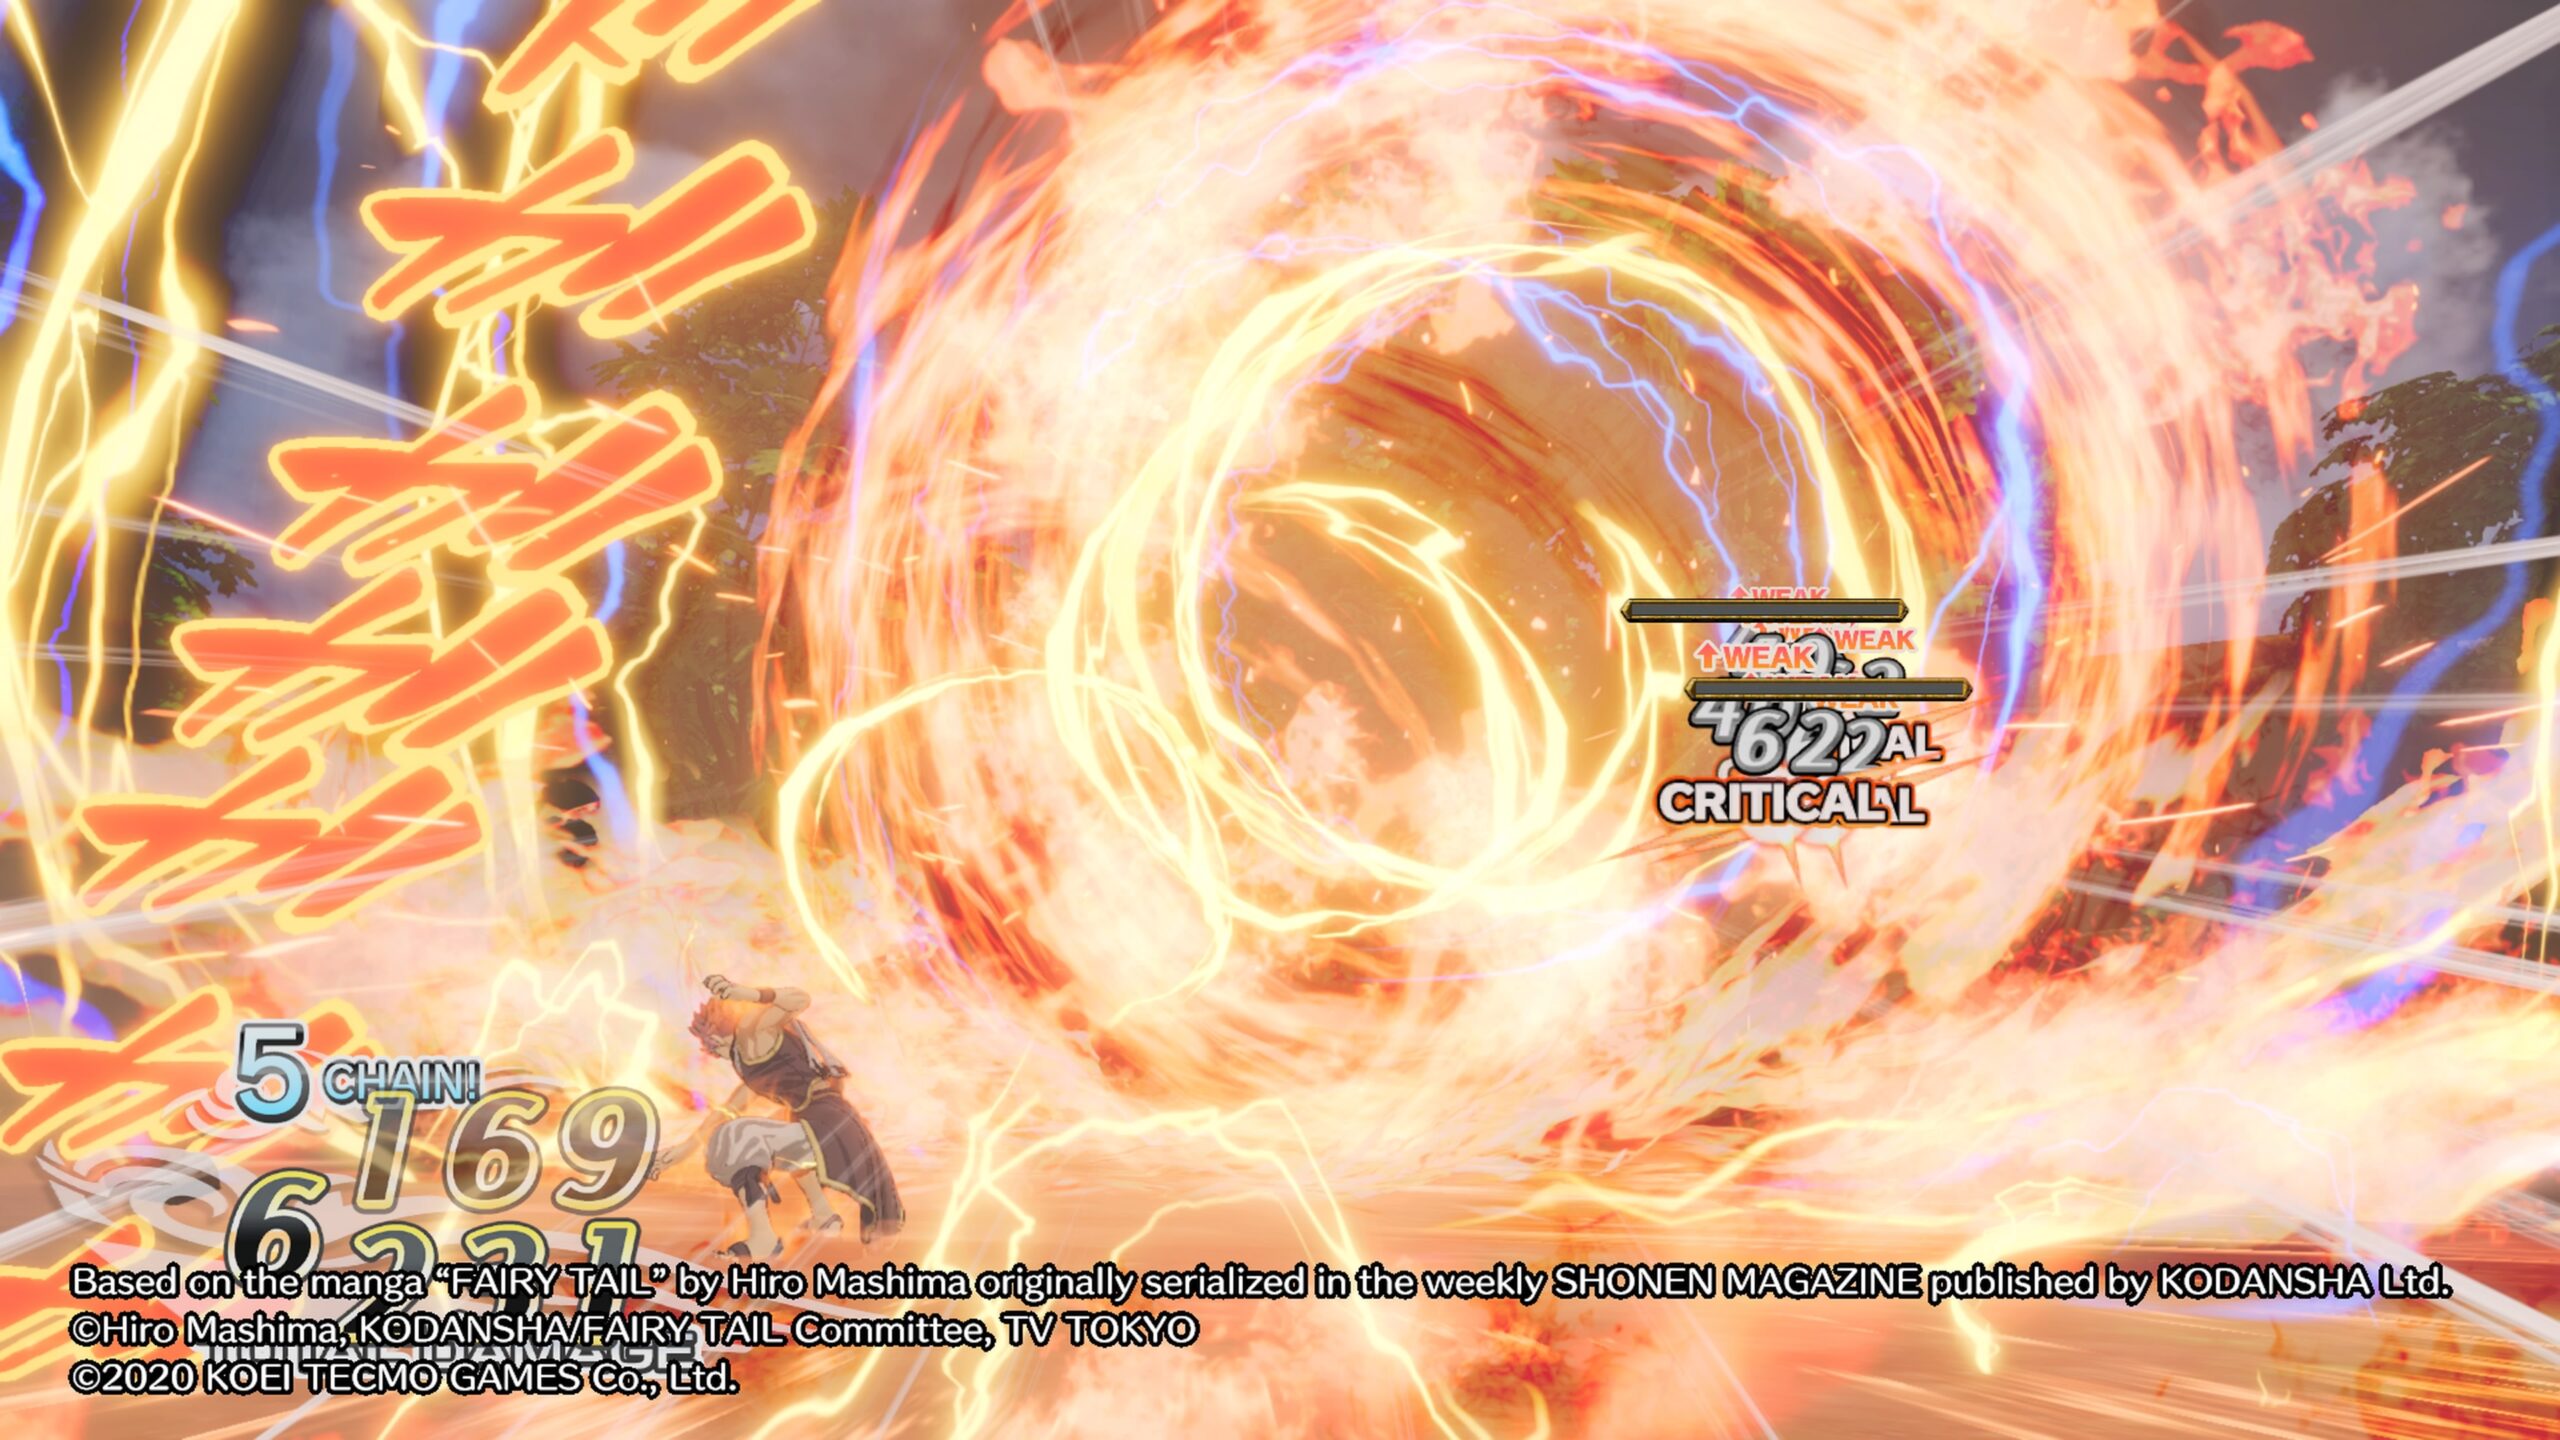 Fairy Tail details - Unison Raid, Extreme Magic Spells, Awakening